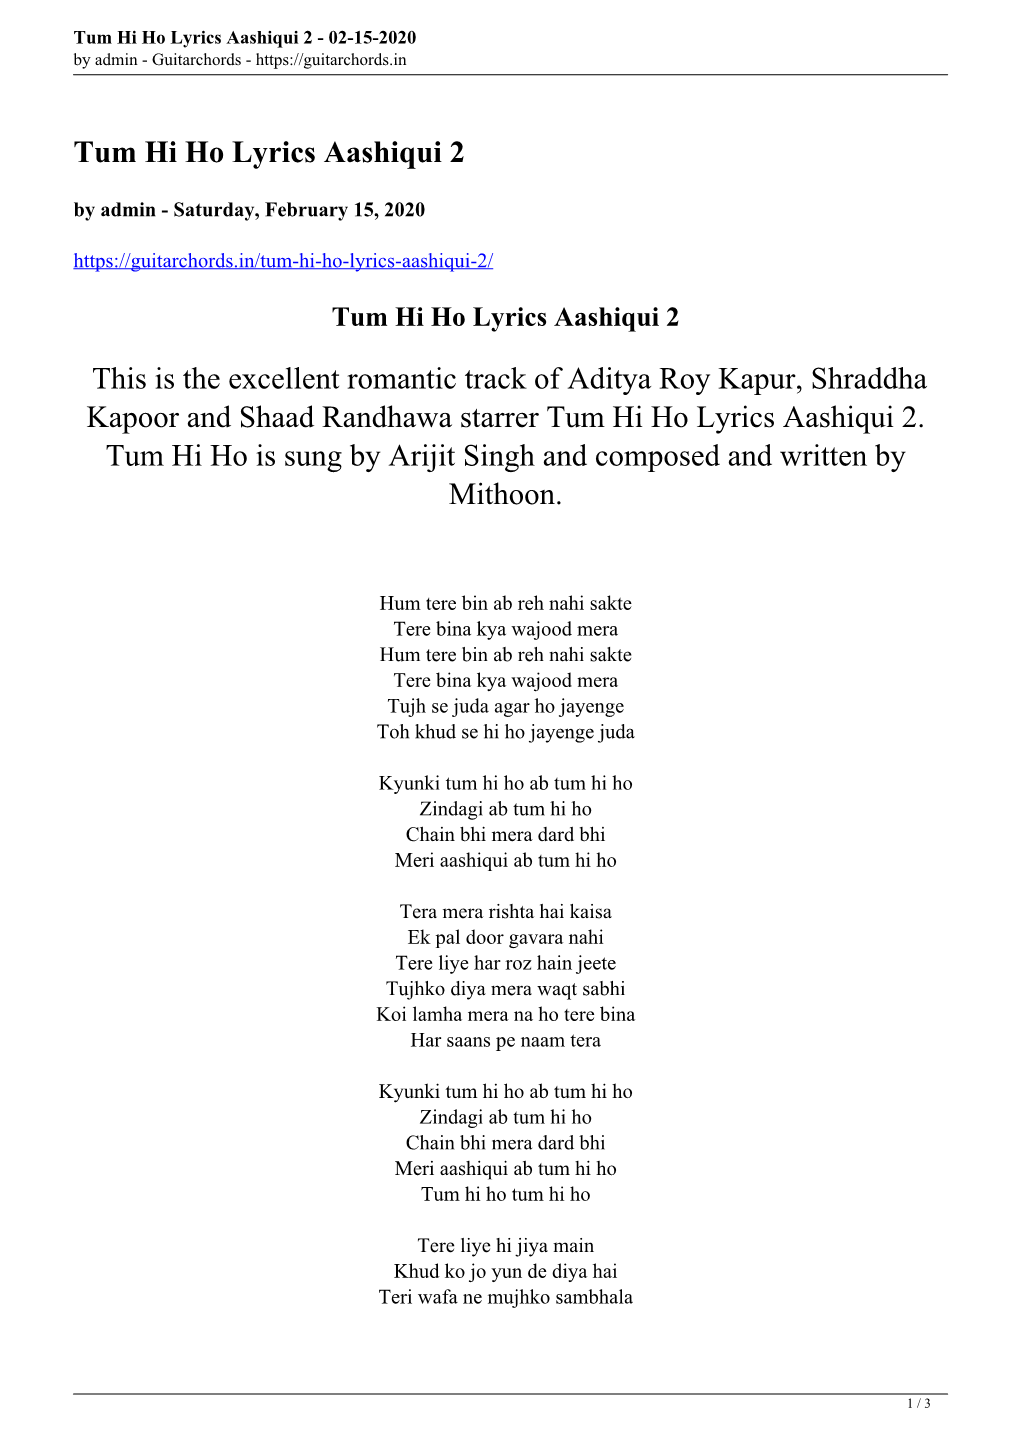 Tum Hi Ho Lyrics Aashiqui 2 - 02-15-2020 by Admin - Guitarchords